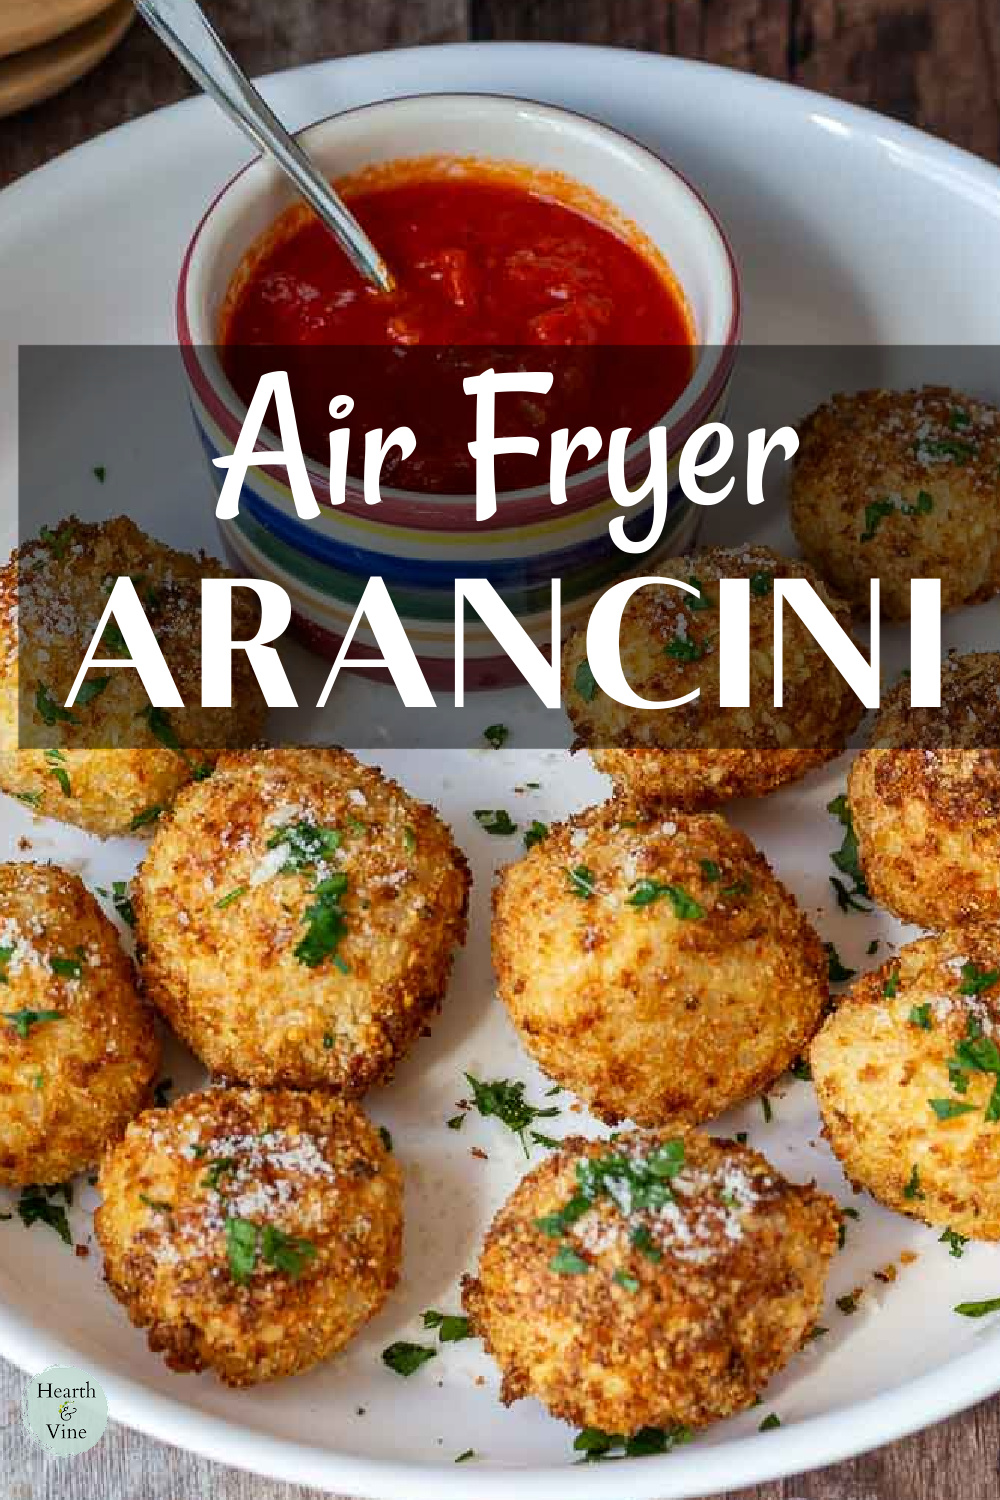 Air fryer arancini balls with mozzarella and marinara.